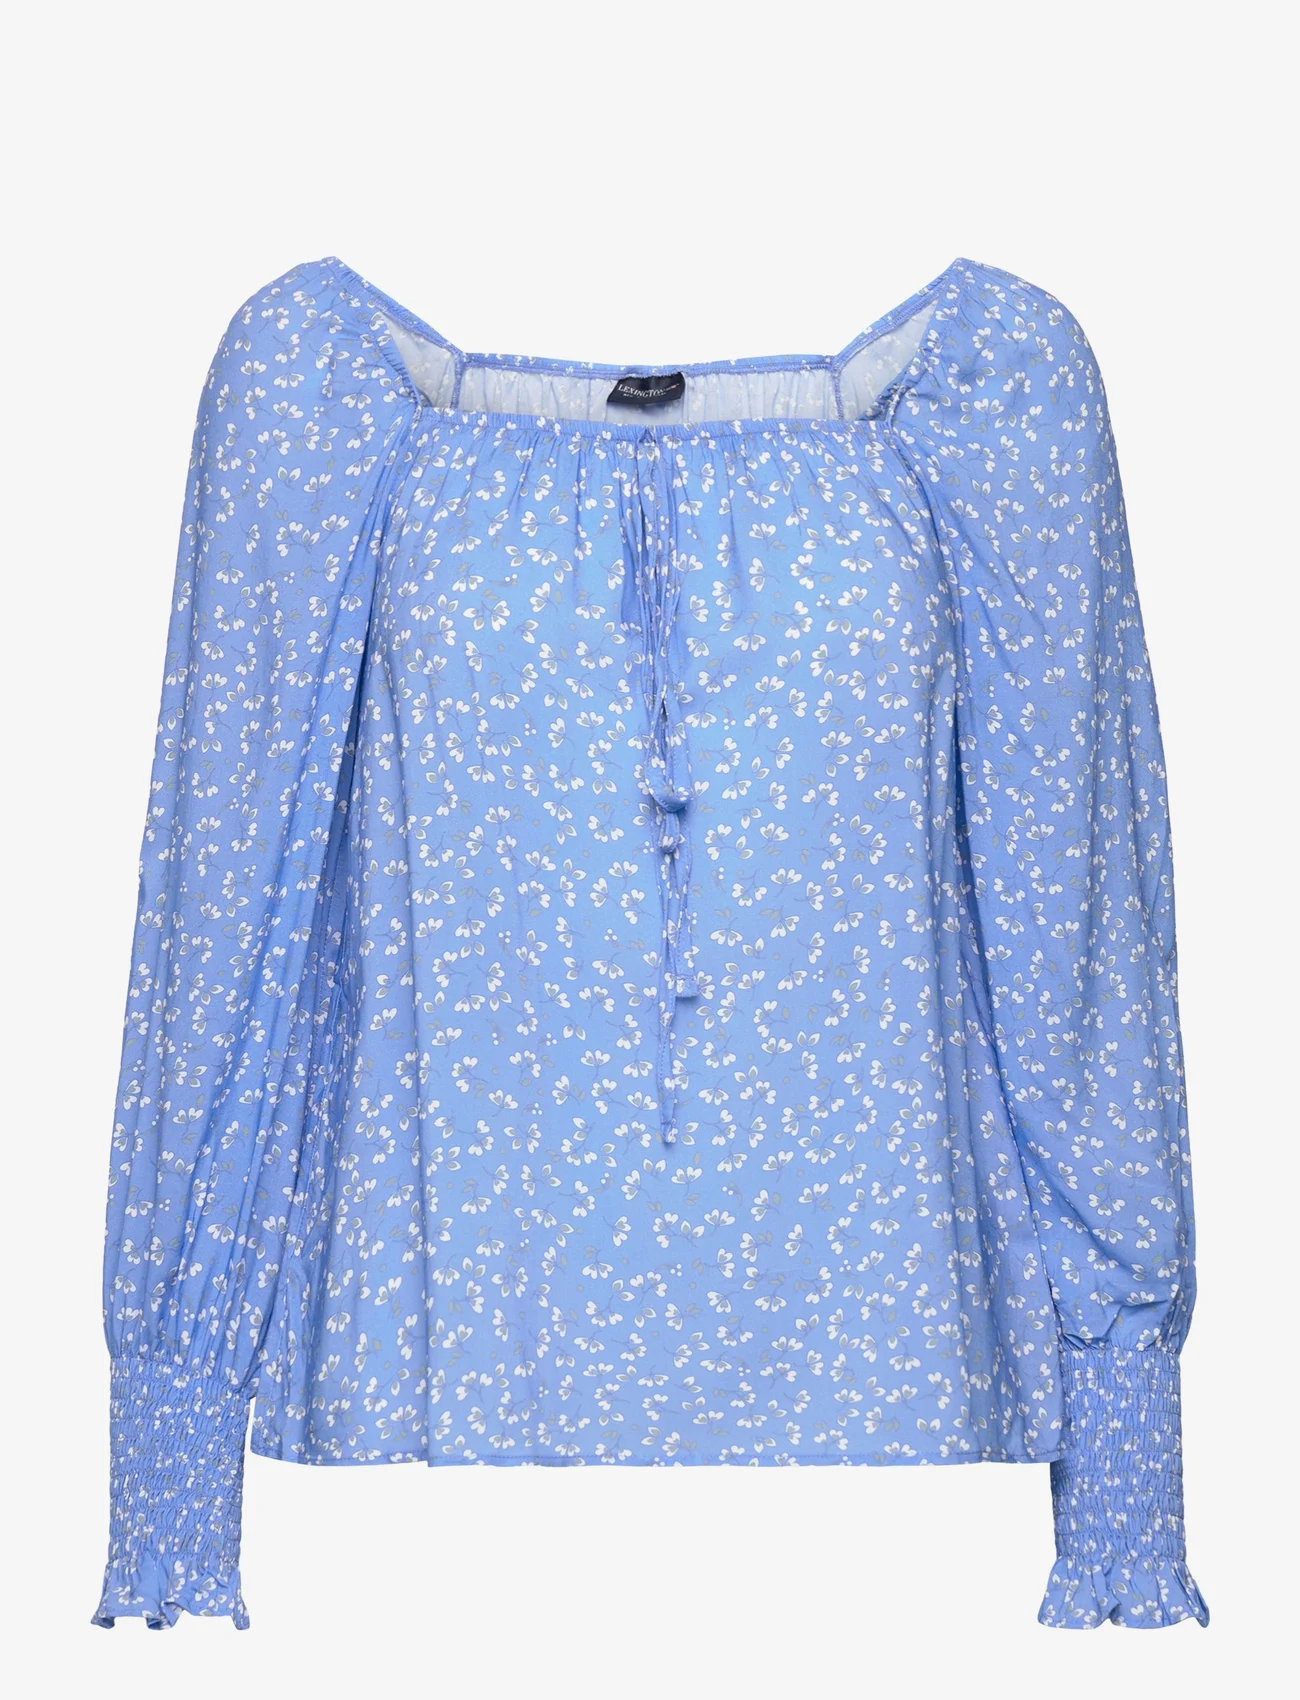 Lexington Clothing - Charlotte Printed Blouse - langärmlige blusen - blue flower print - 0